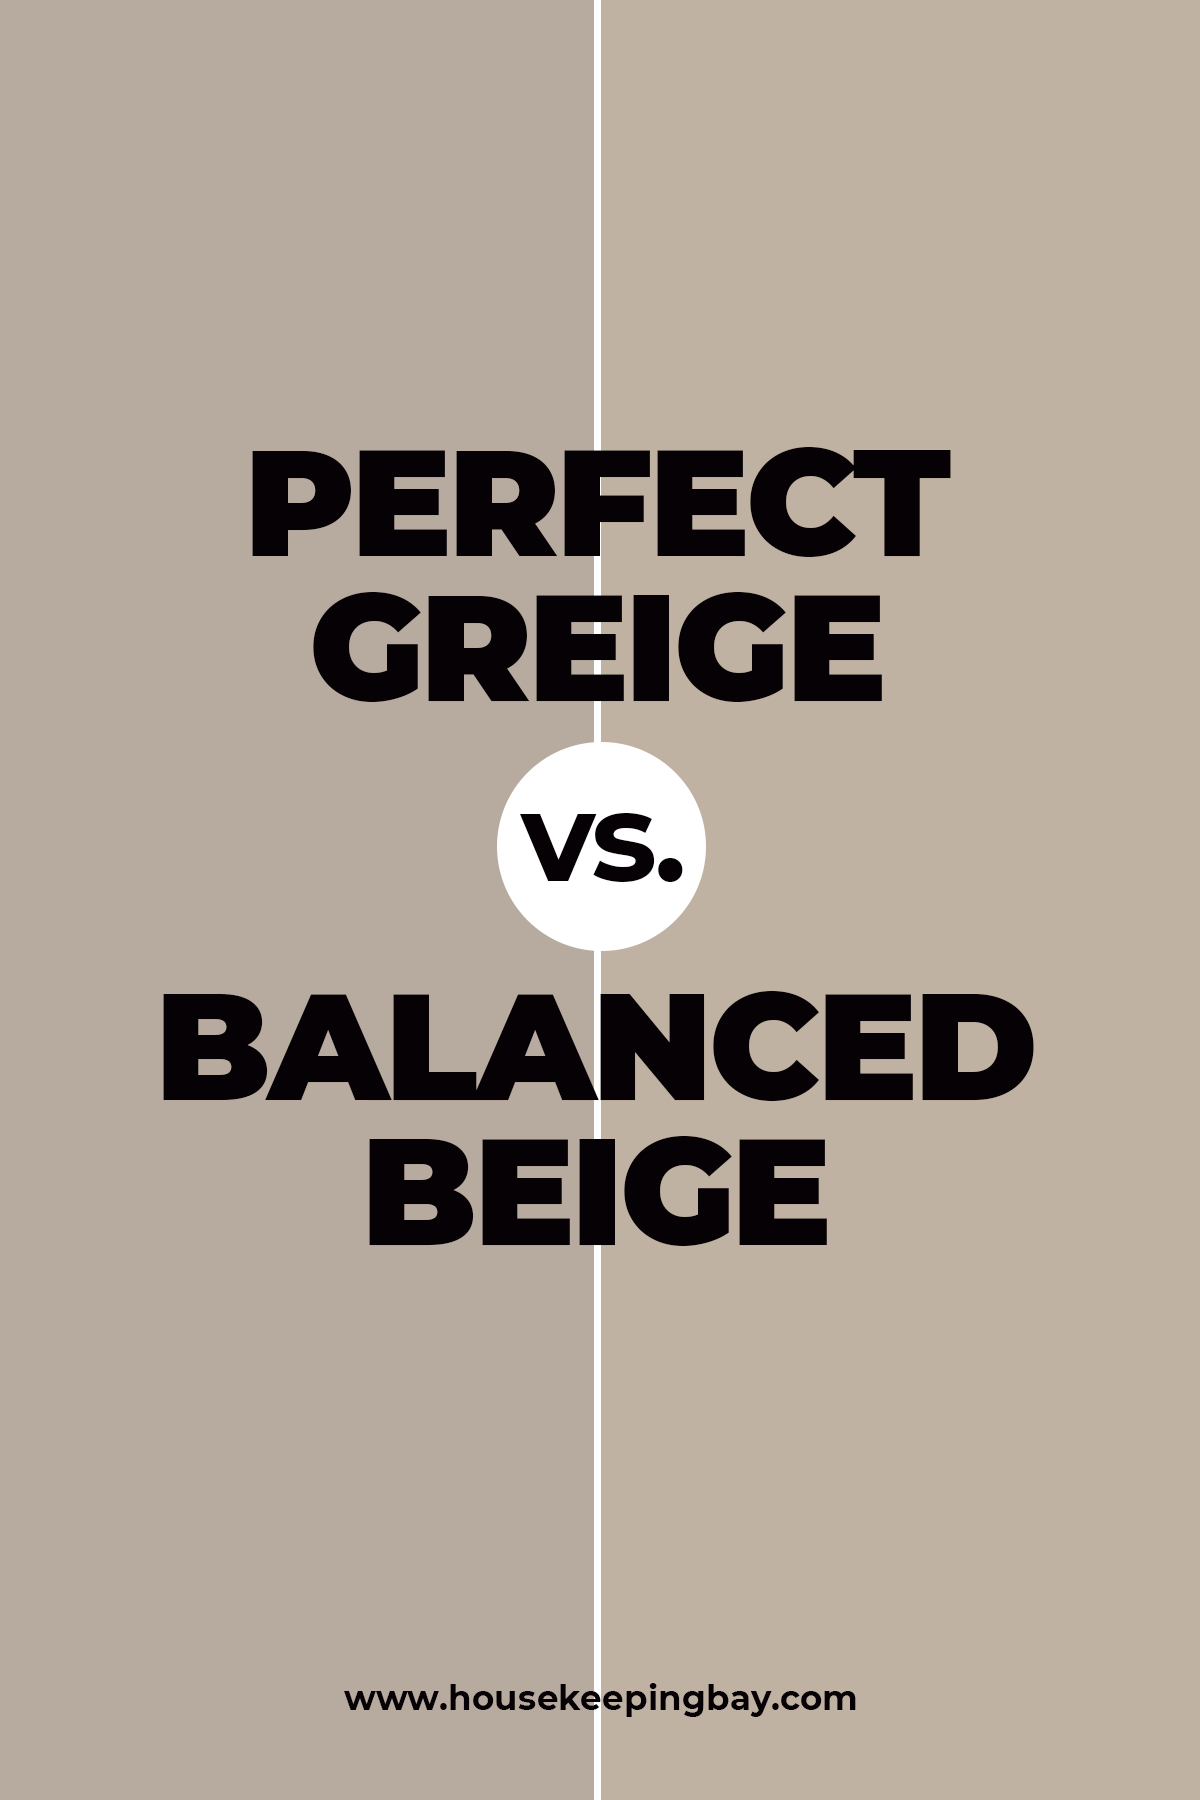 Perfect Greige vs. Balanced Beige